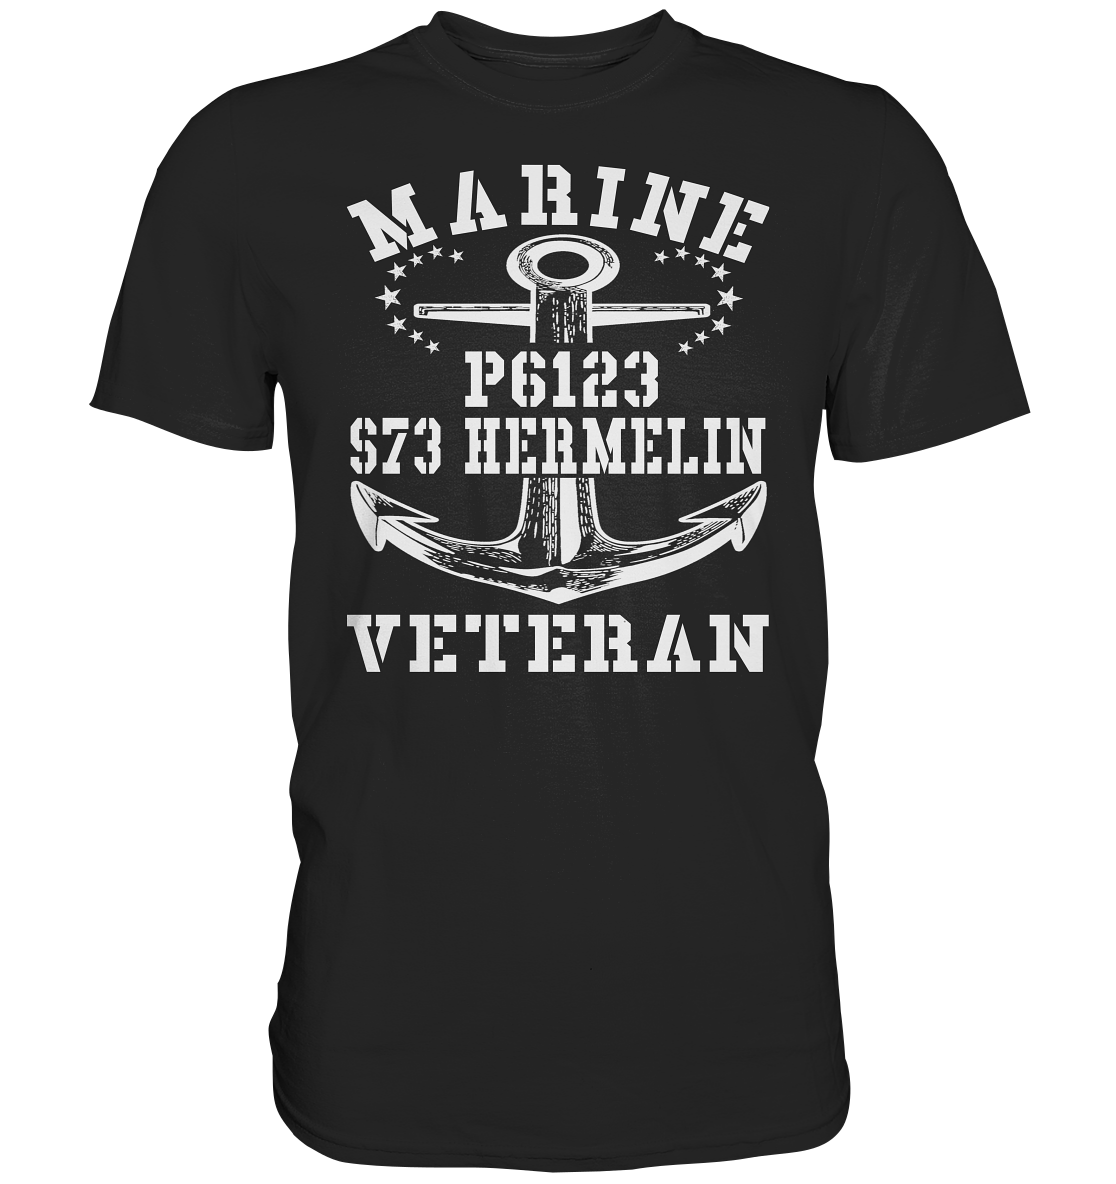 FK-Schnellboot P6123 HERMELIN Marine Veteran - Premium Shirt